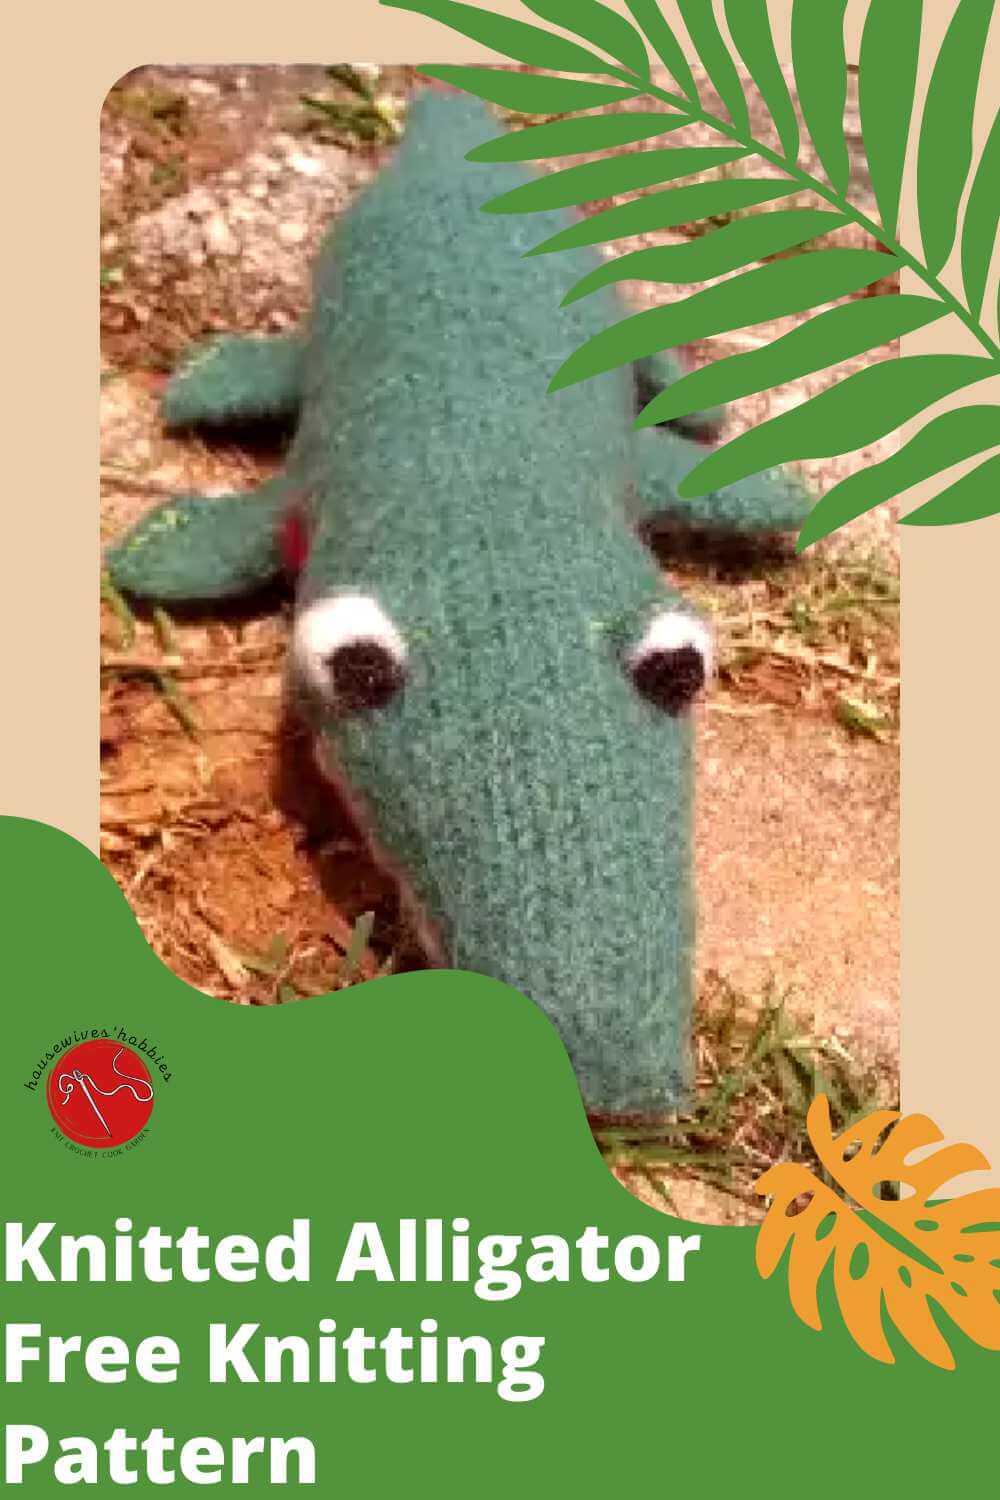 Knitted Alligator free knitting pattern